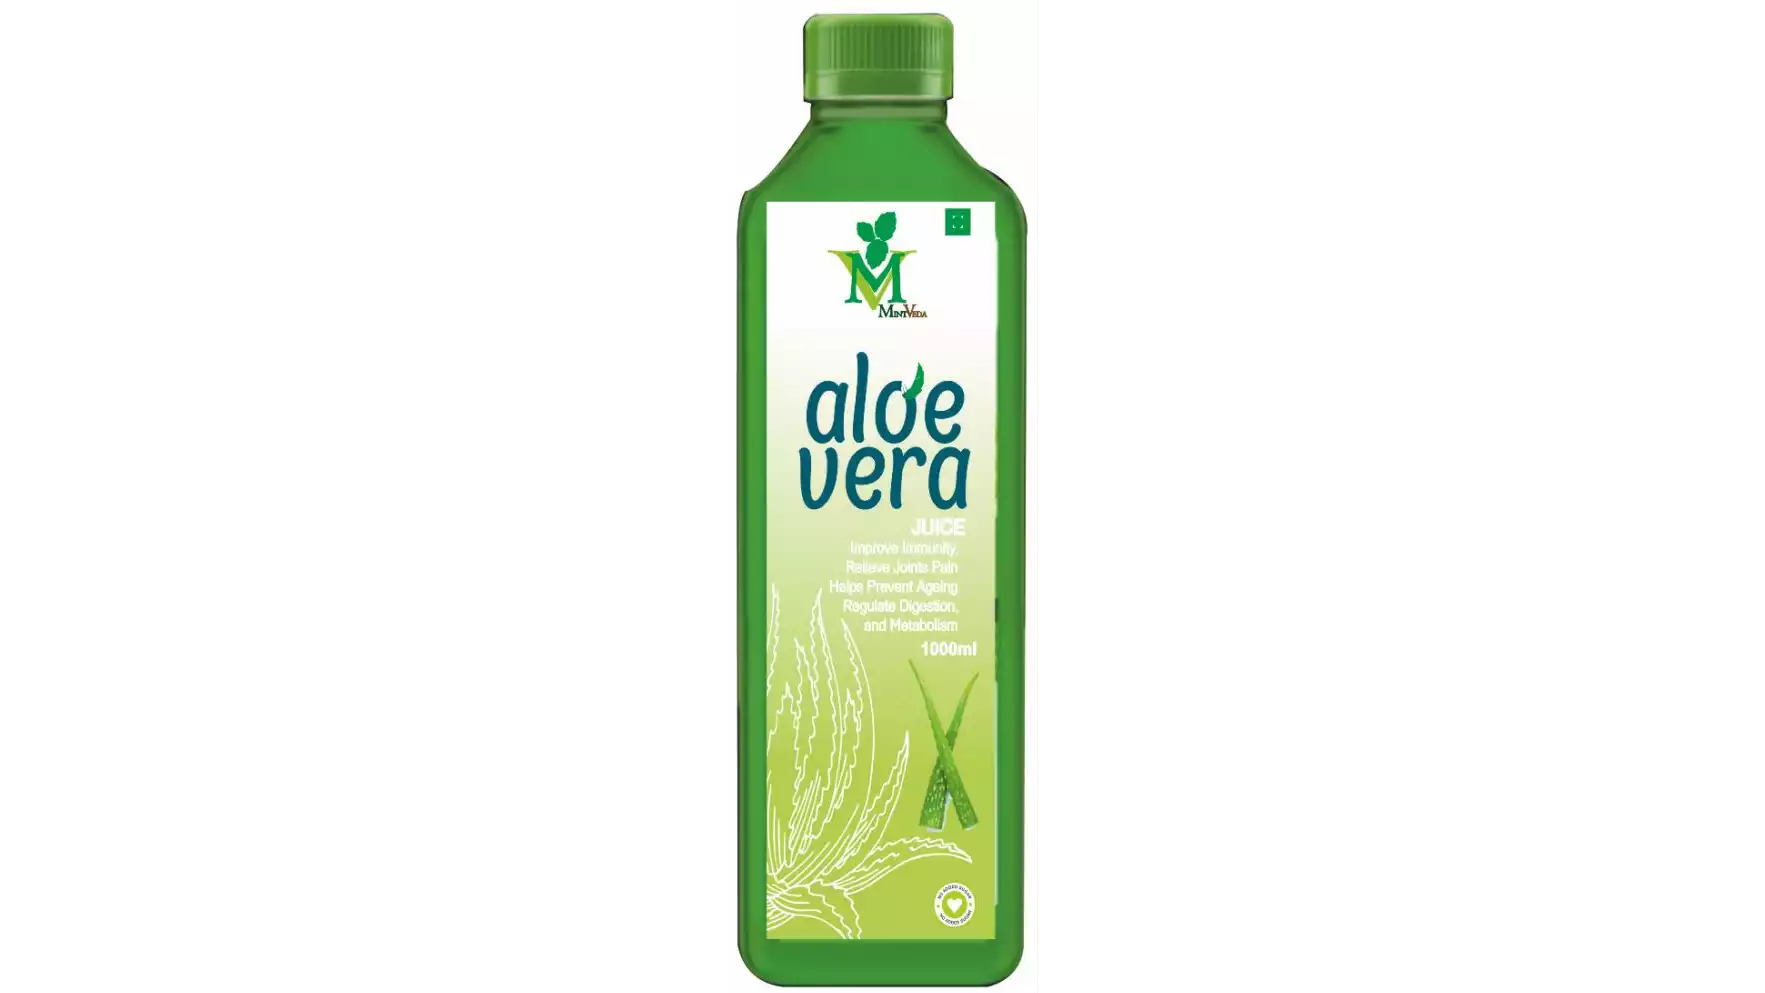 Mint Veda Aloevera (Sugar Free) Juice (1liter)